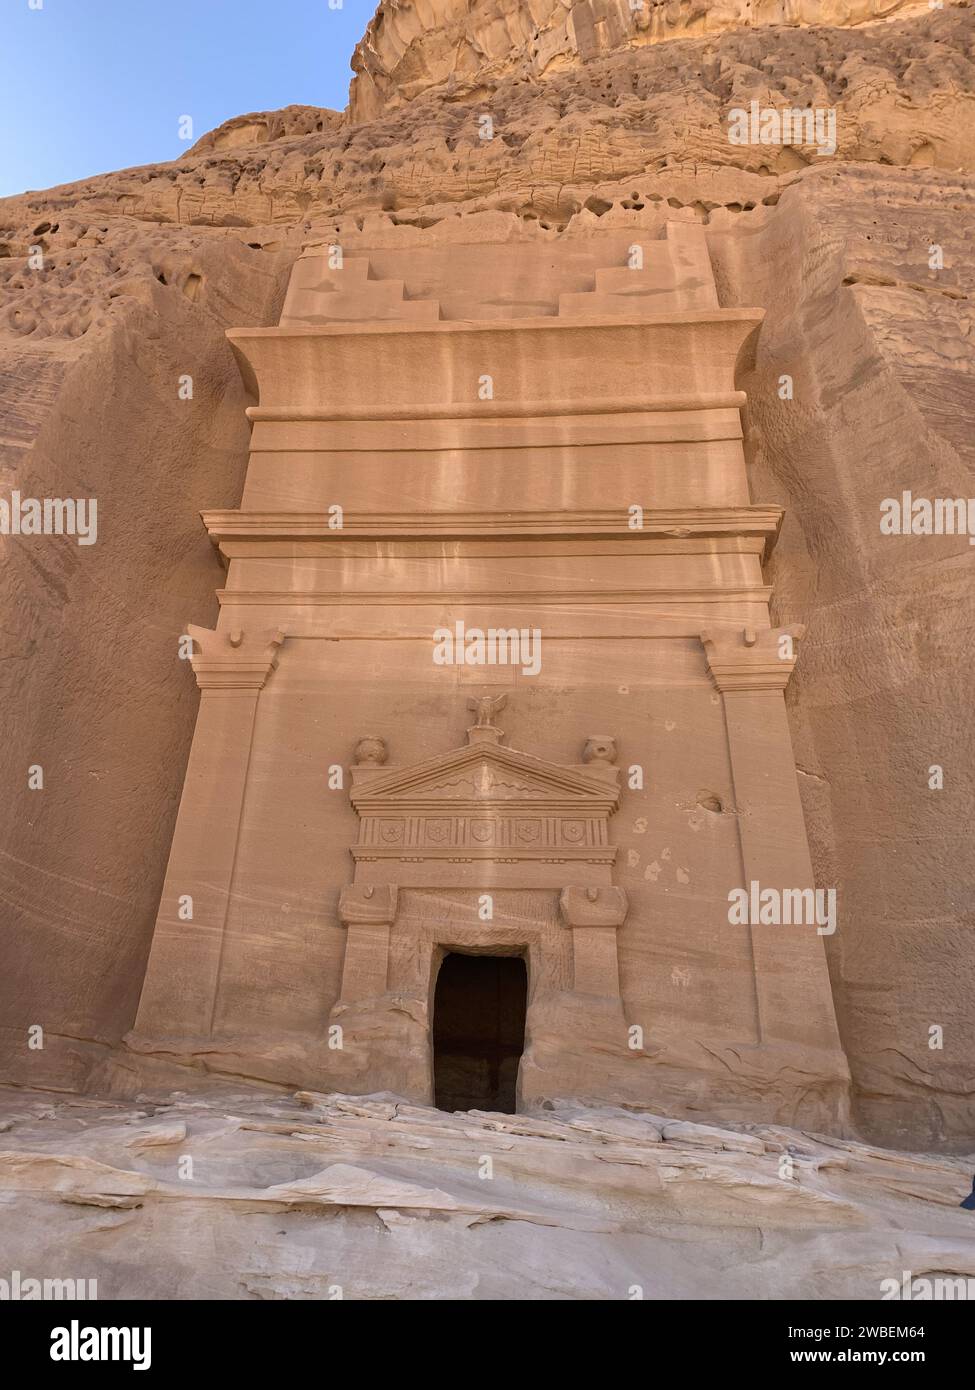 The tombs of Hegra (a.k.a. Mada'in Salih or Al-Hijr) the ancient city of the Nabataean Empire located near Al-Ula, Saudi Arabia Stock Photo